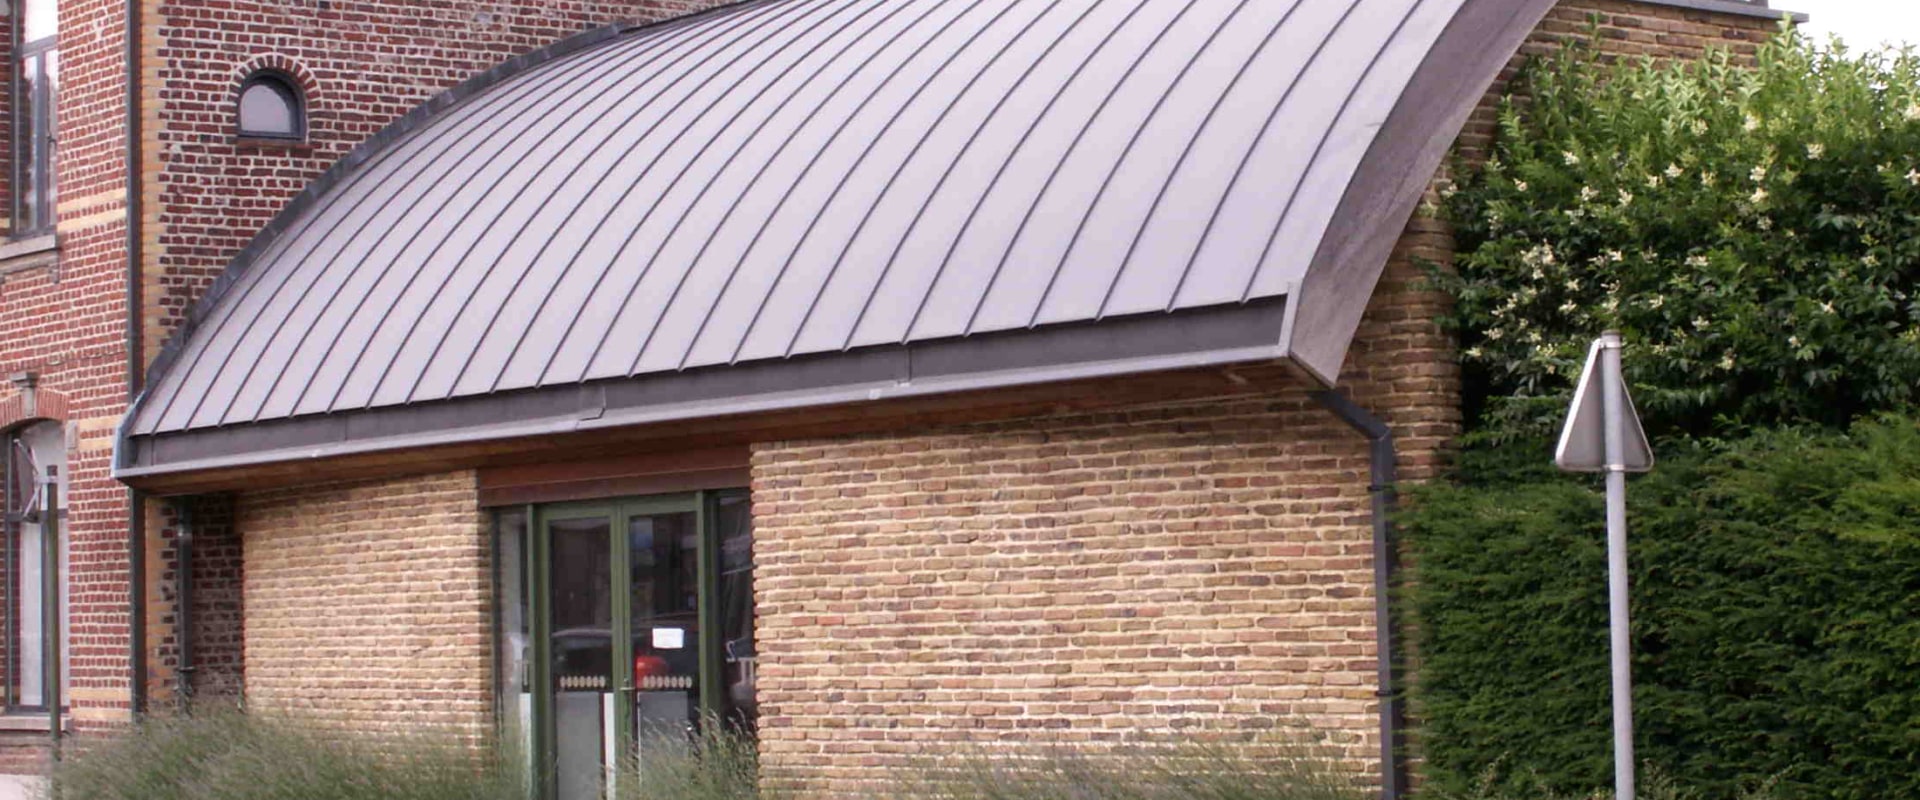 Wat is aluminium dakbedekking?